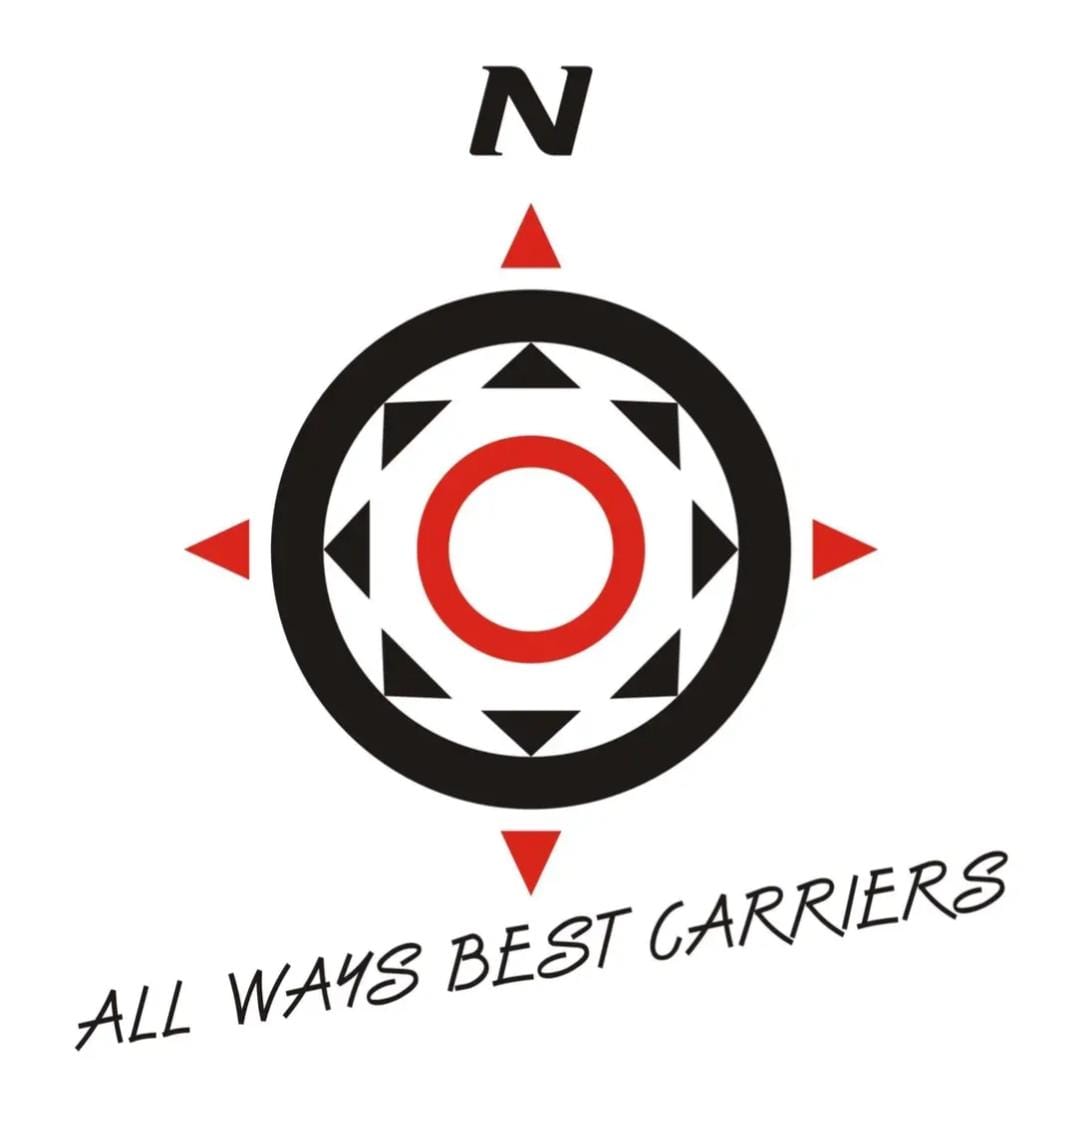 All ways best carriers Logo